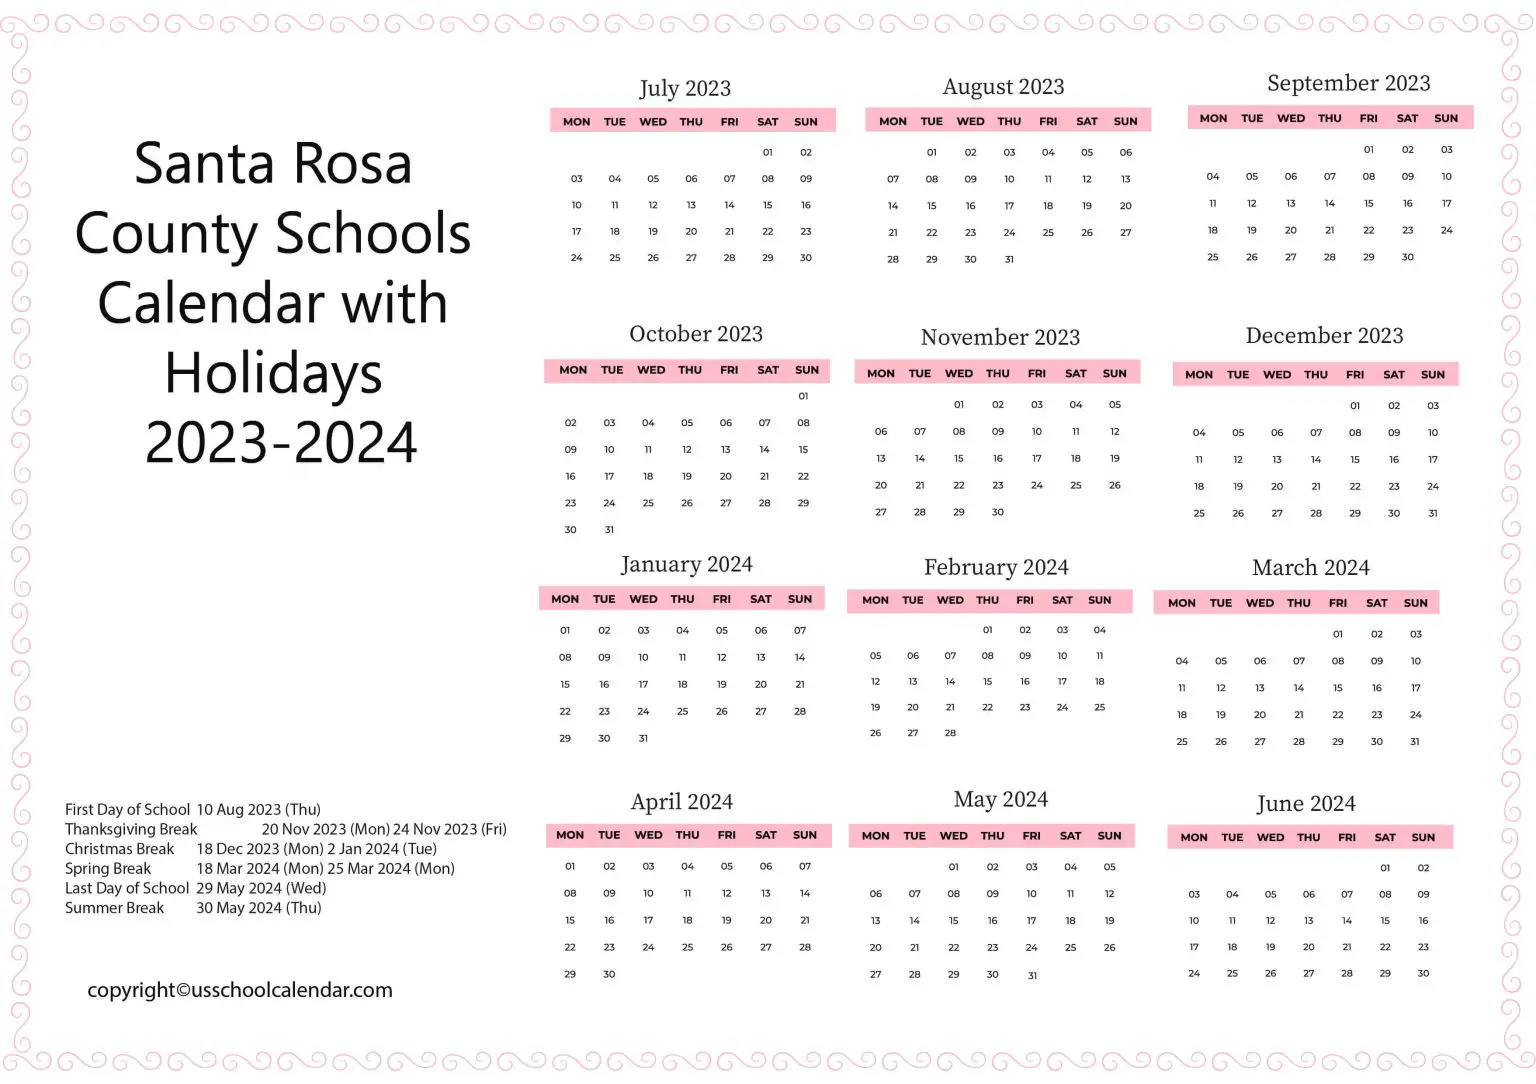 santa-rosa-county-schools-calendar-with-holidays-2023-2024